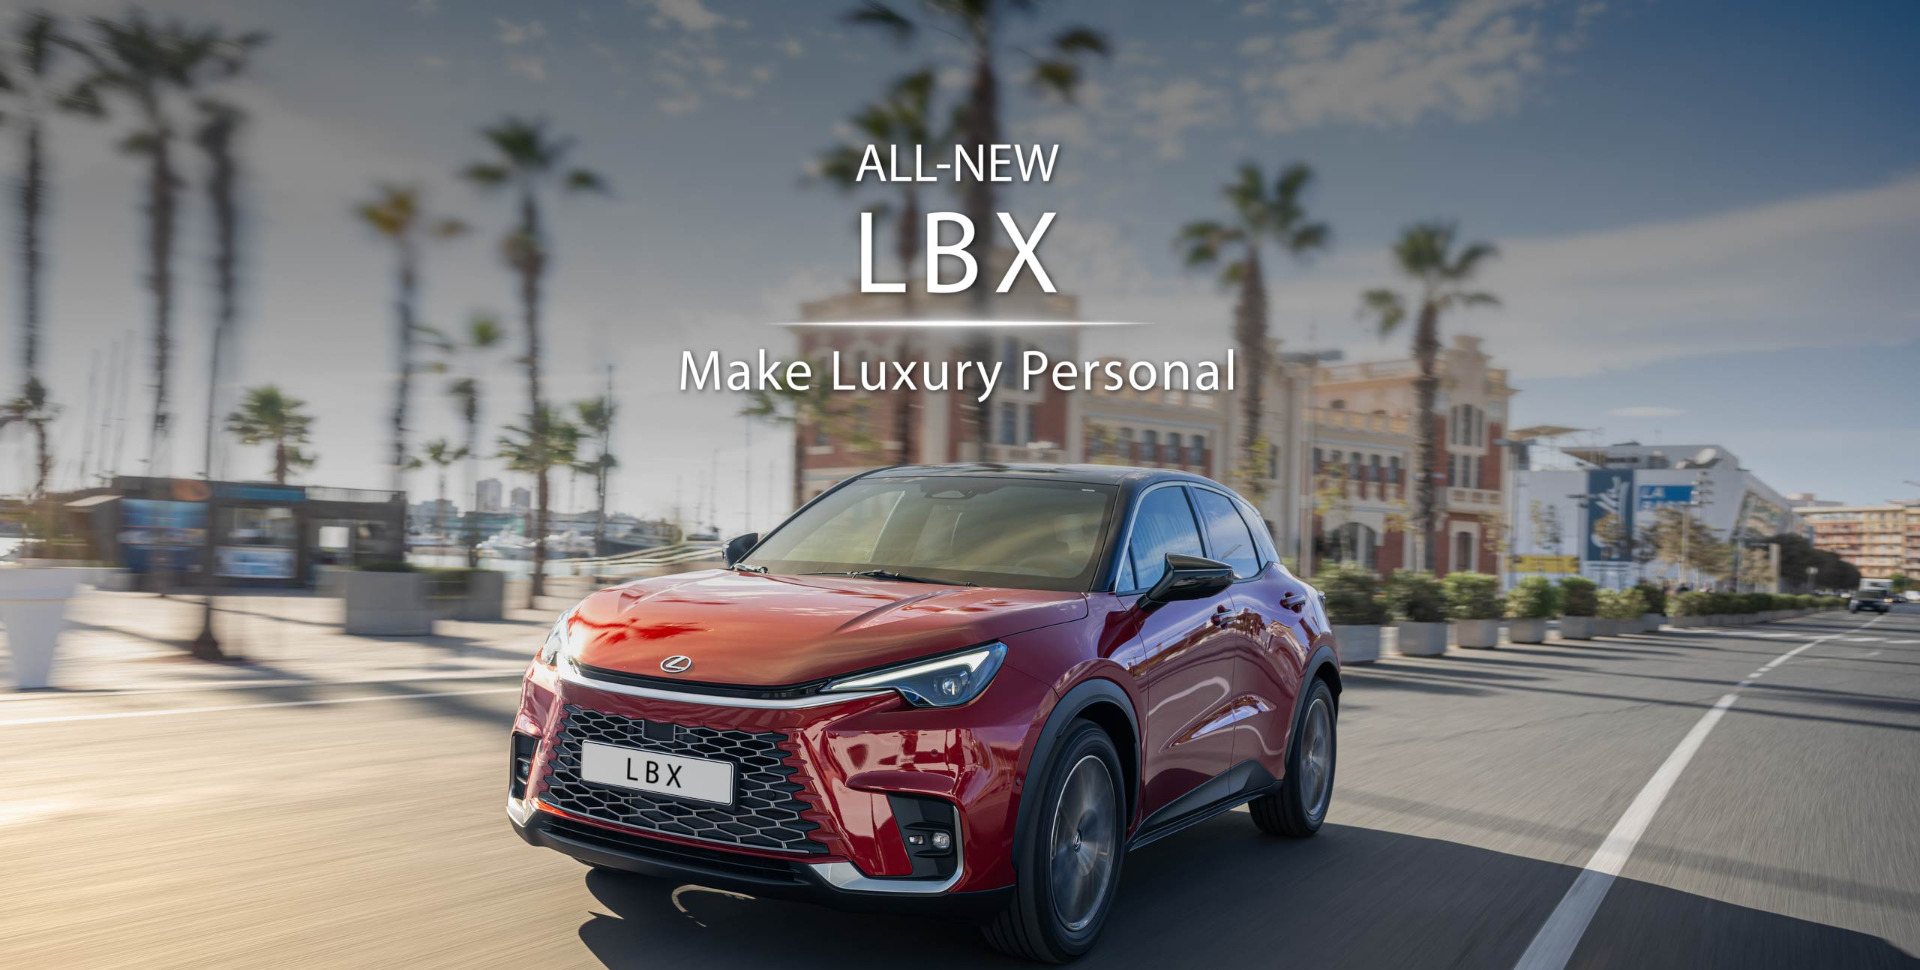 LBX Make Luxury Personal